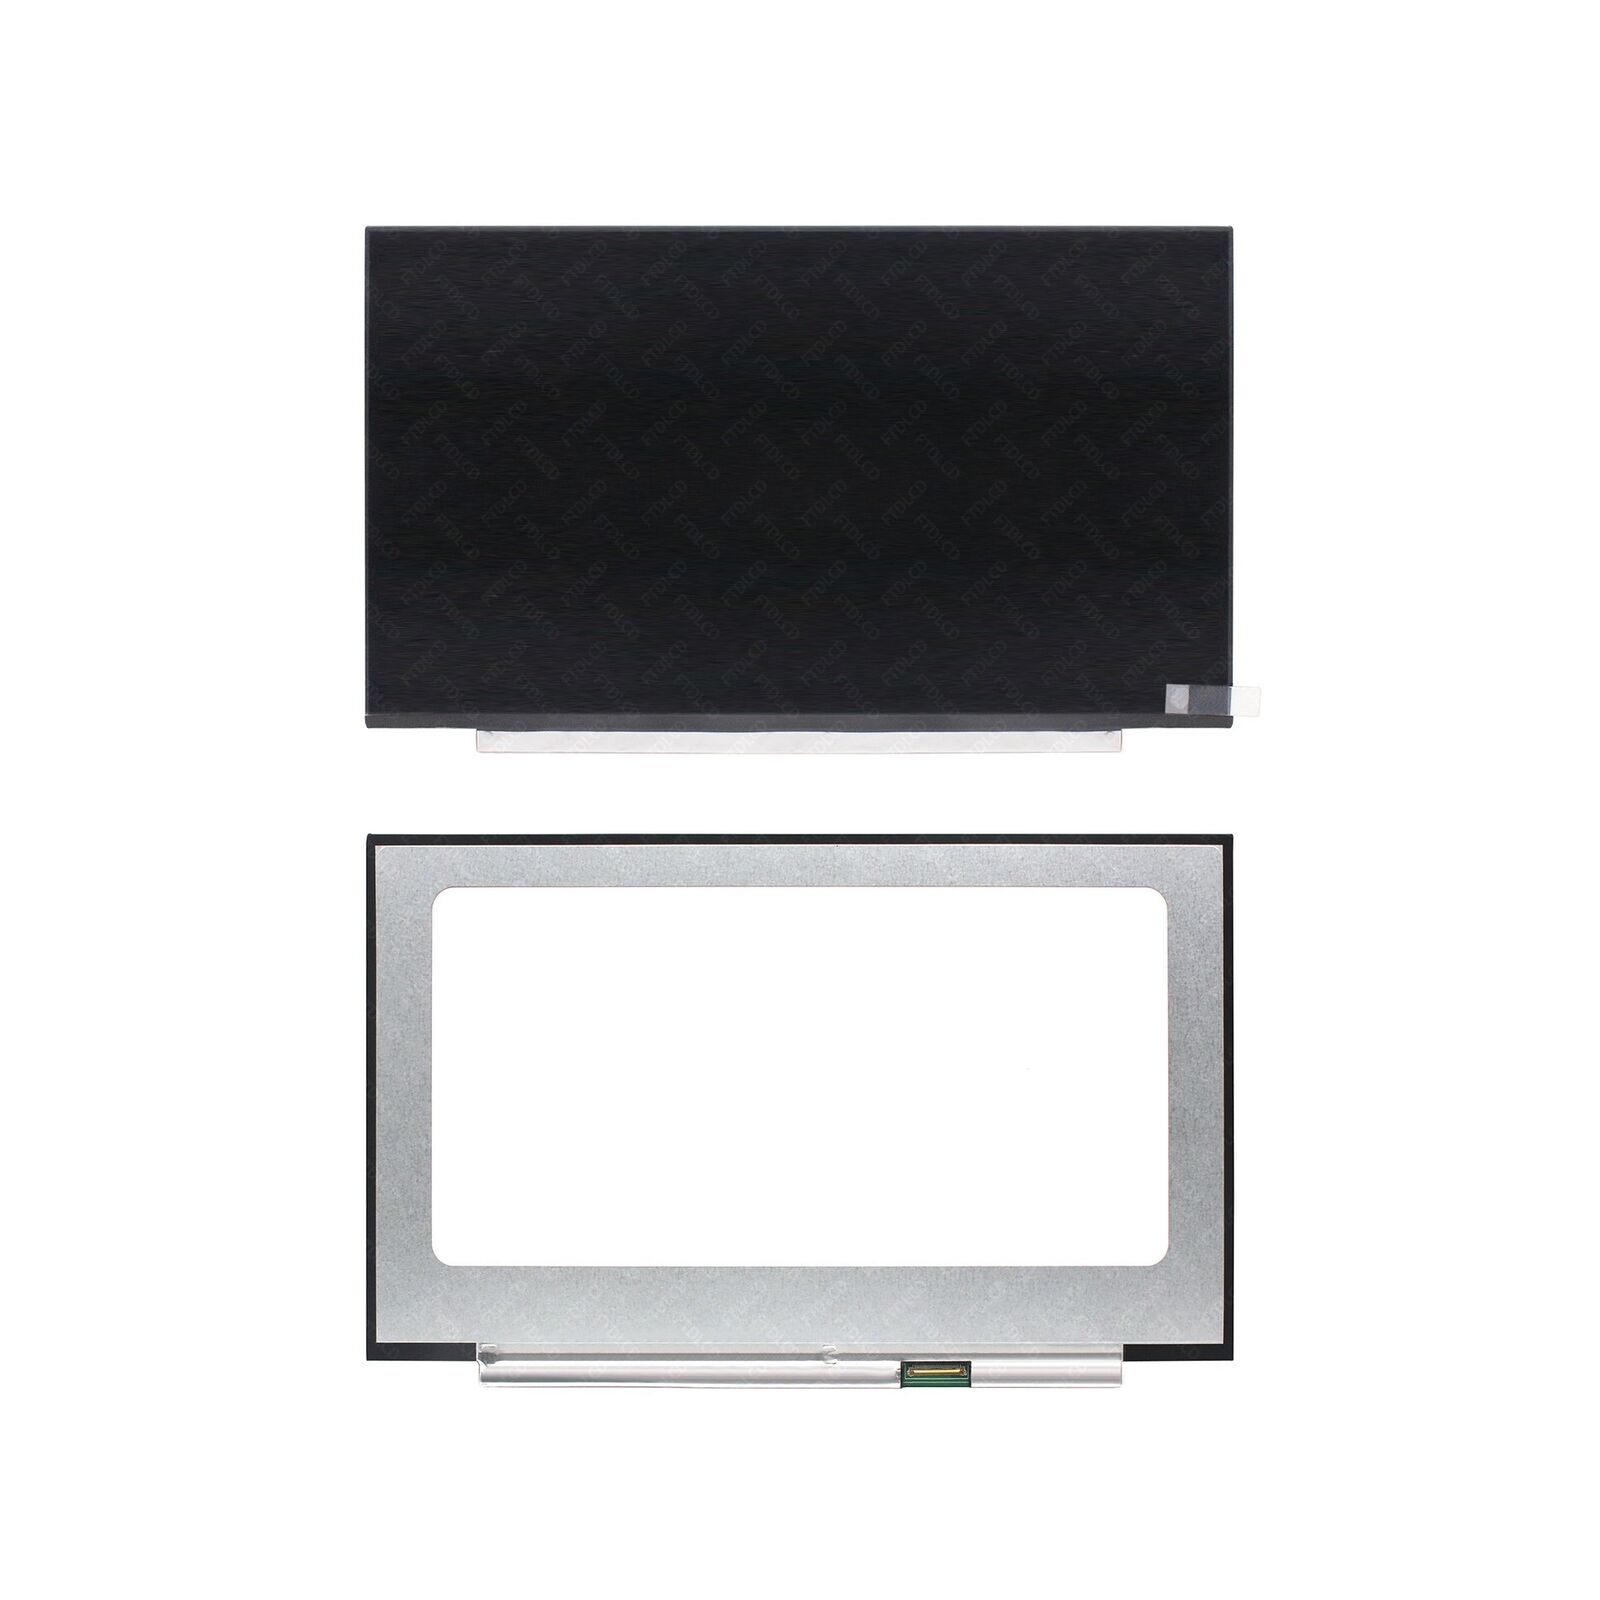 LP173WFG-SPB2 LP173WFG(SP)(B2) 17.3'' 72% NTSC 144Hz FHD IPS LCD Display Screen